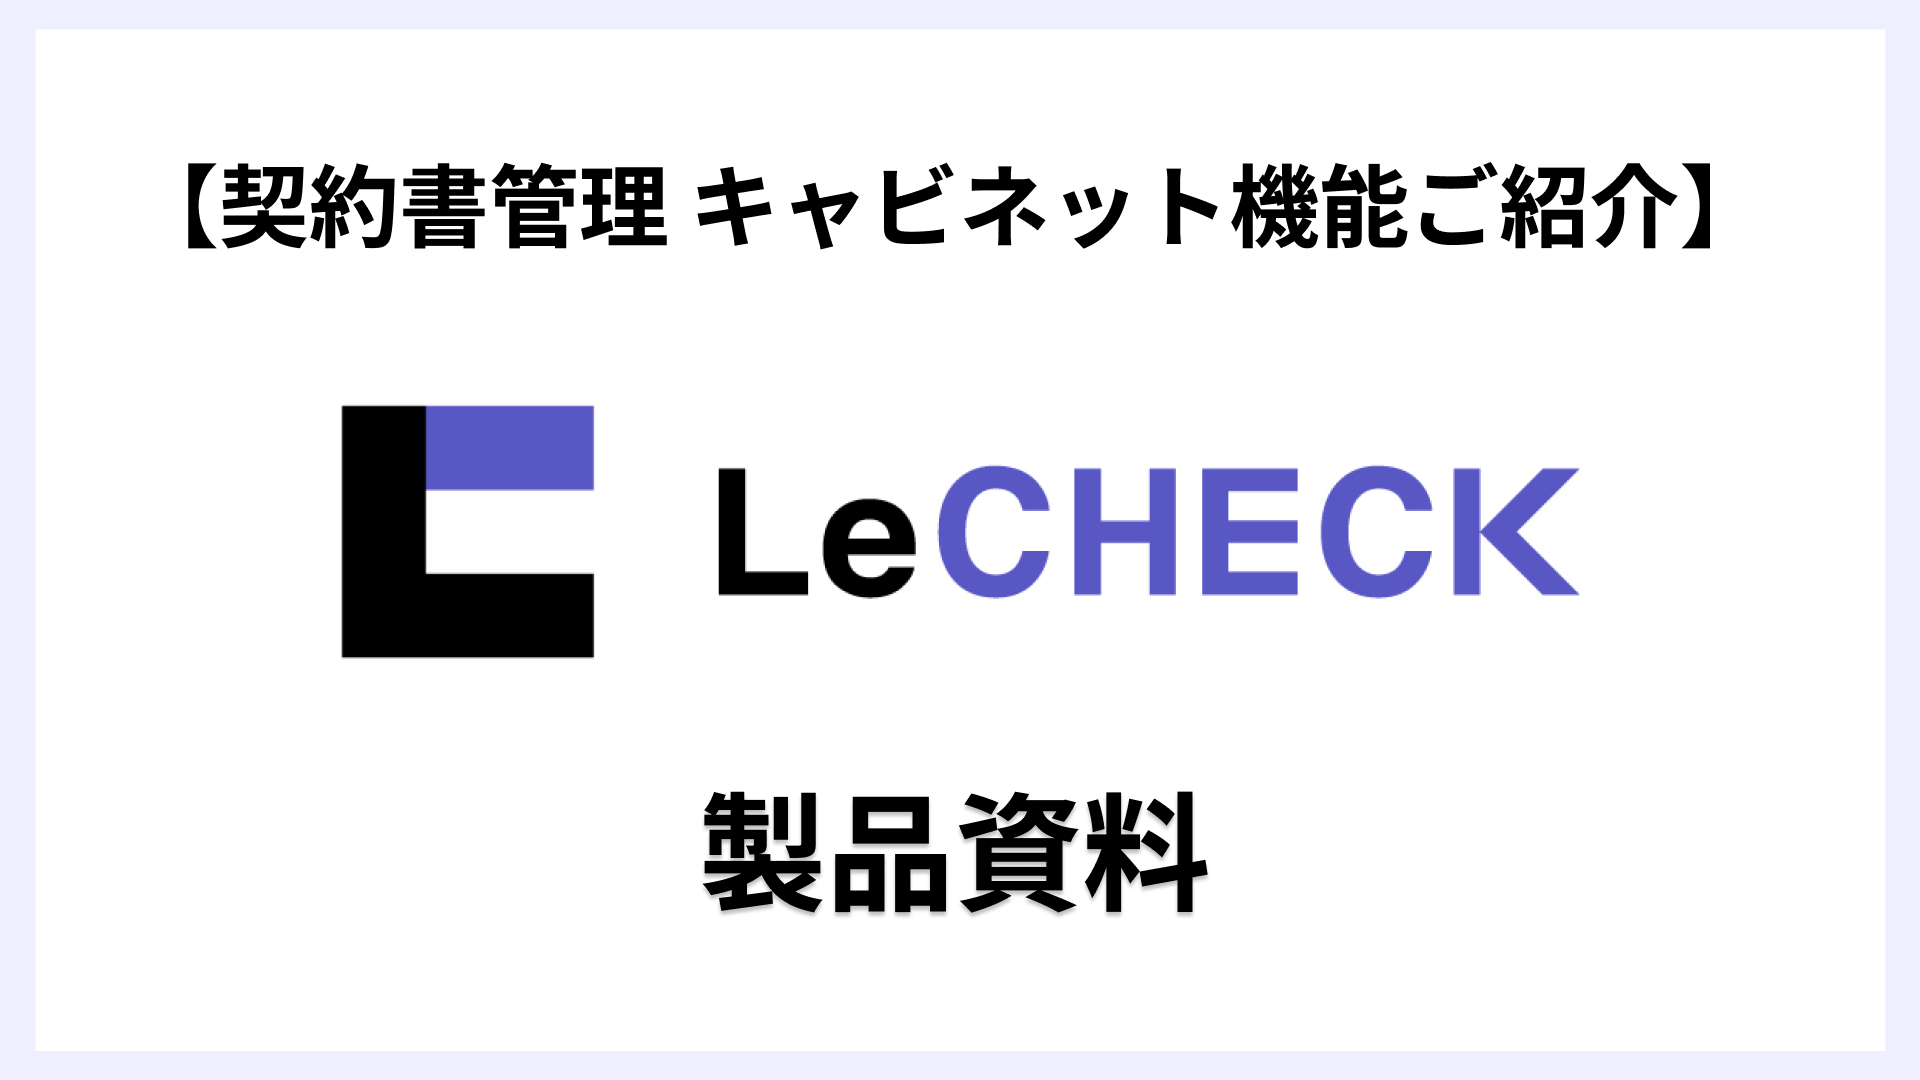 LeCHECK 製品資料 キャビネット機能ご紹介